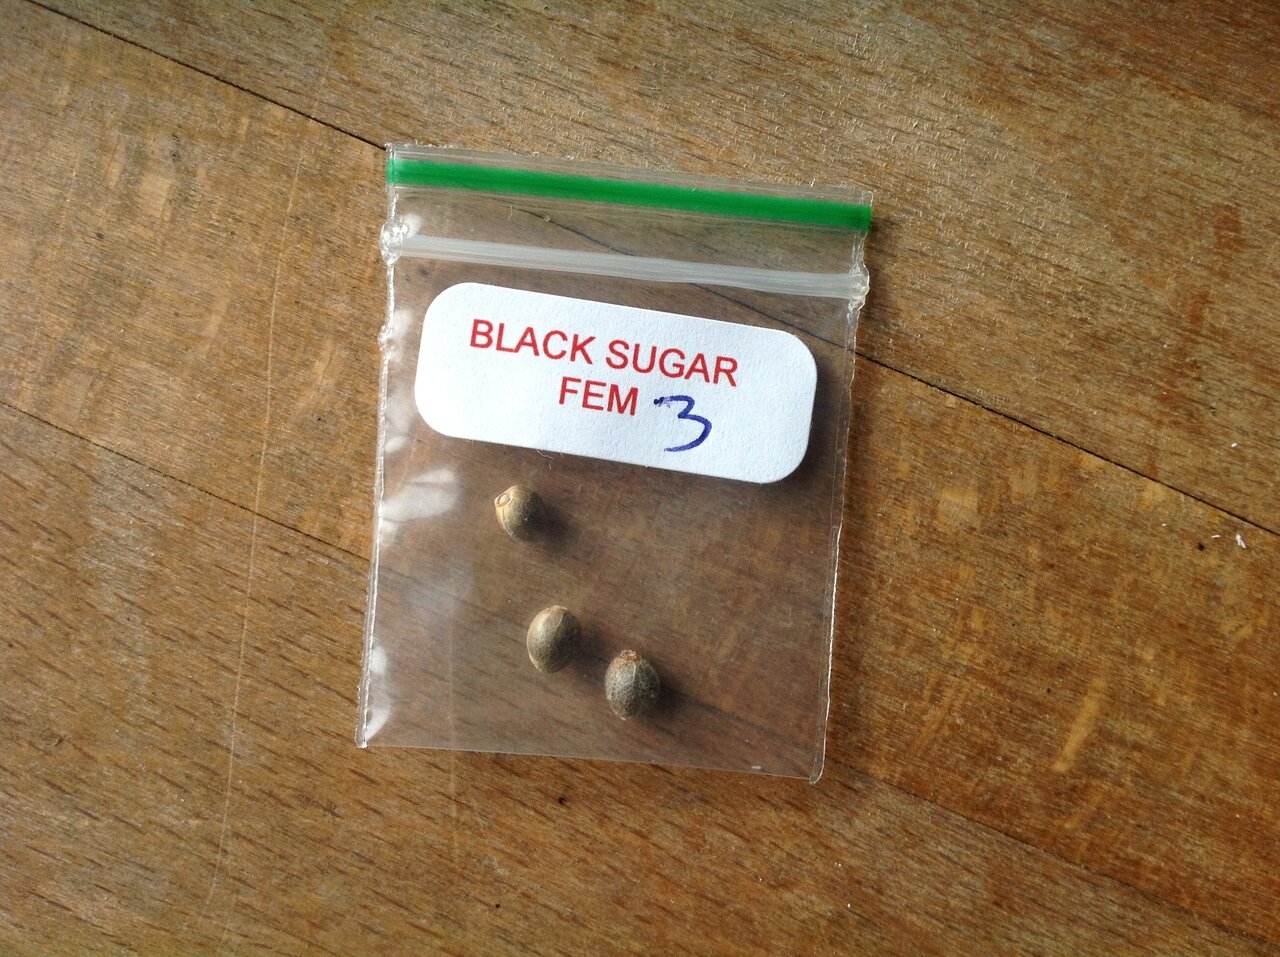 Black Sugar seeds